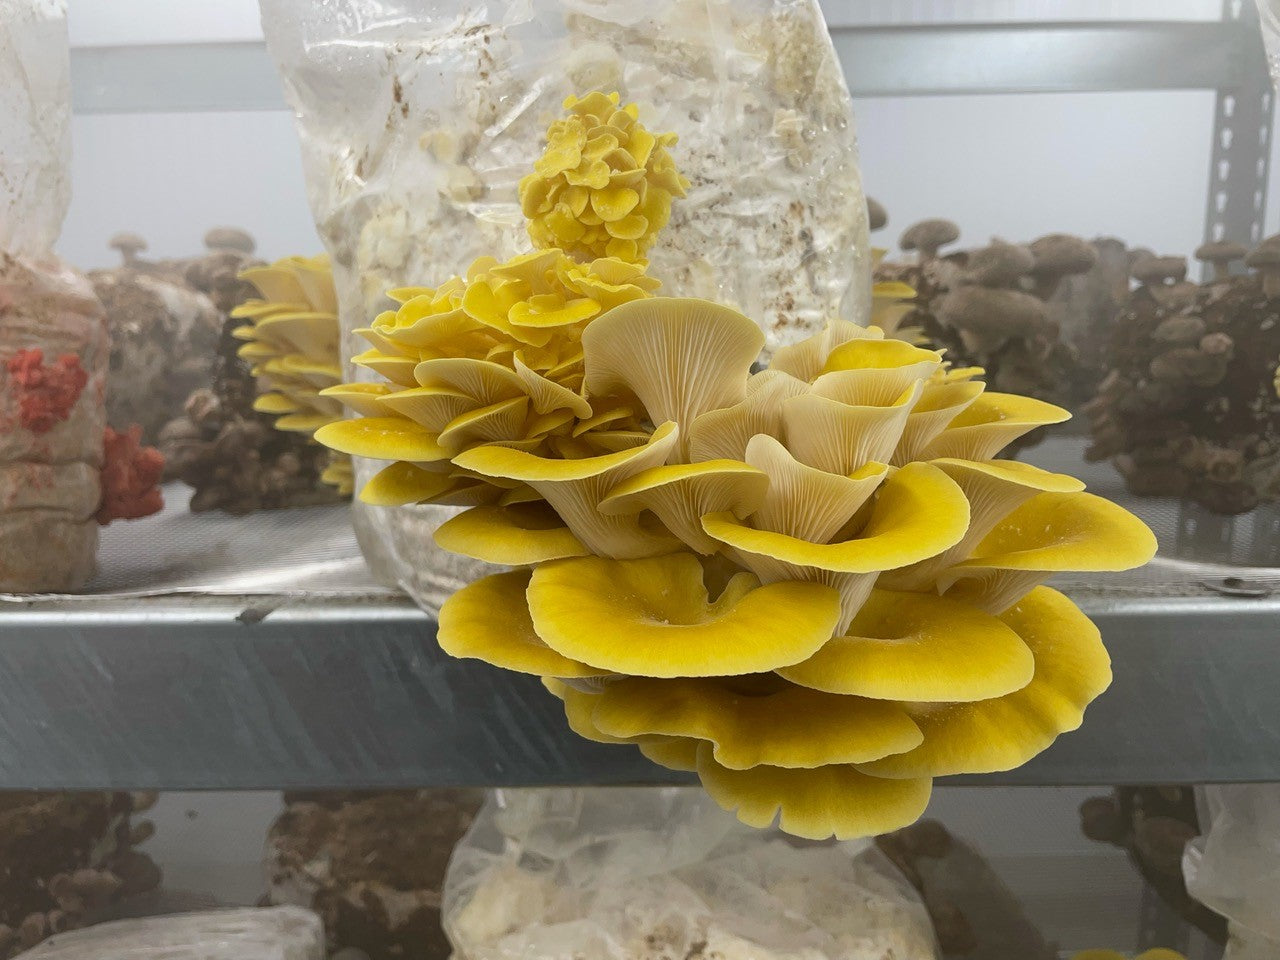 Yellow-Gold Oyster Mushroom Fruiting Block